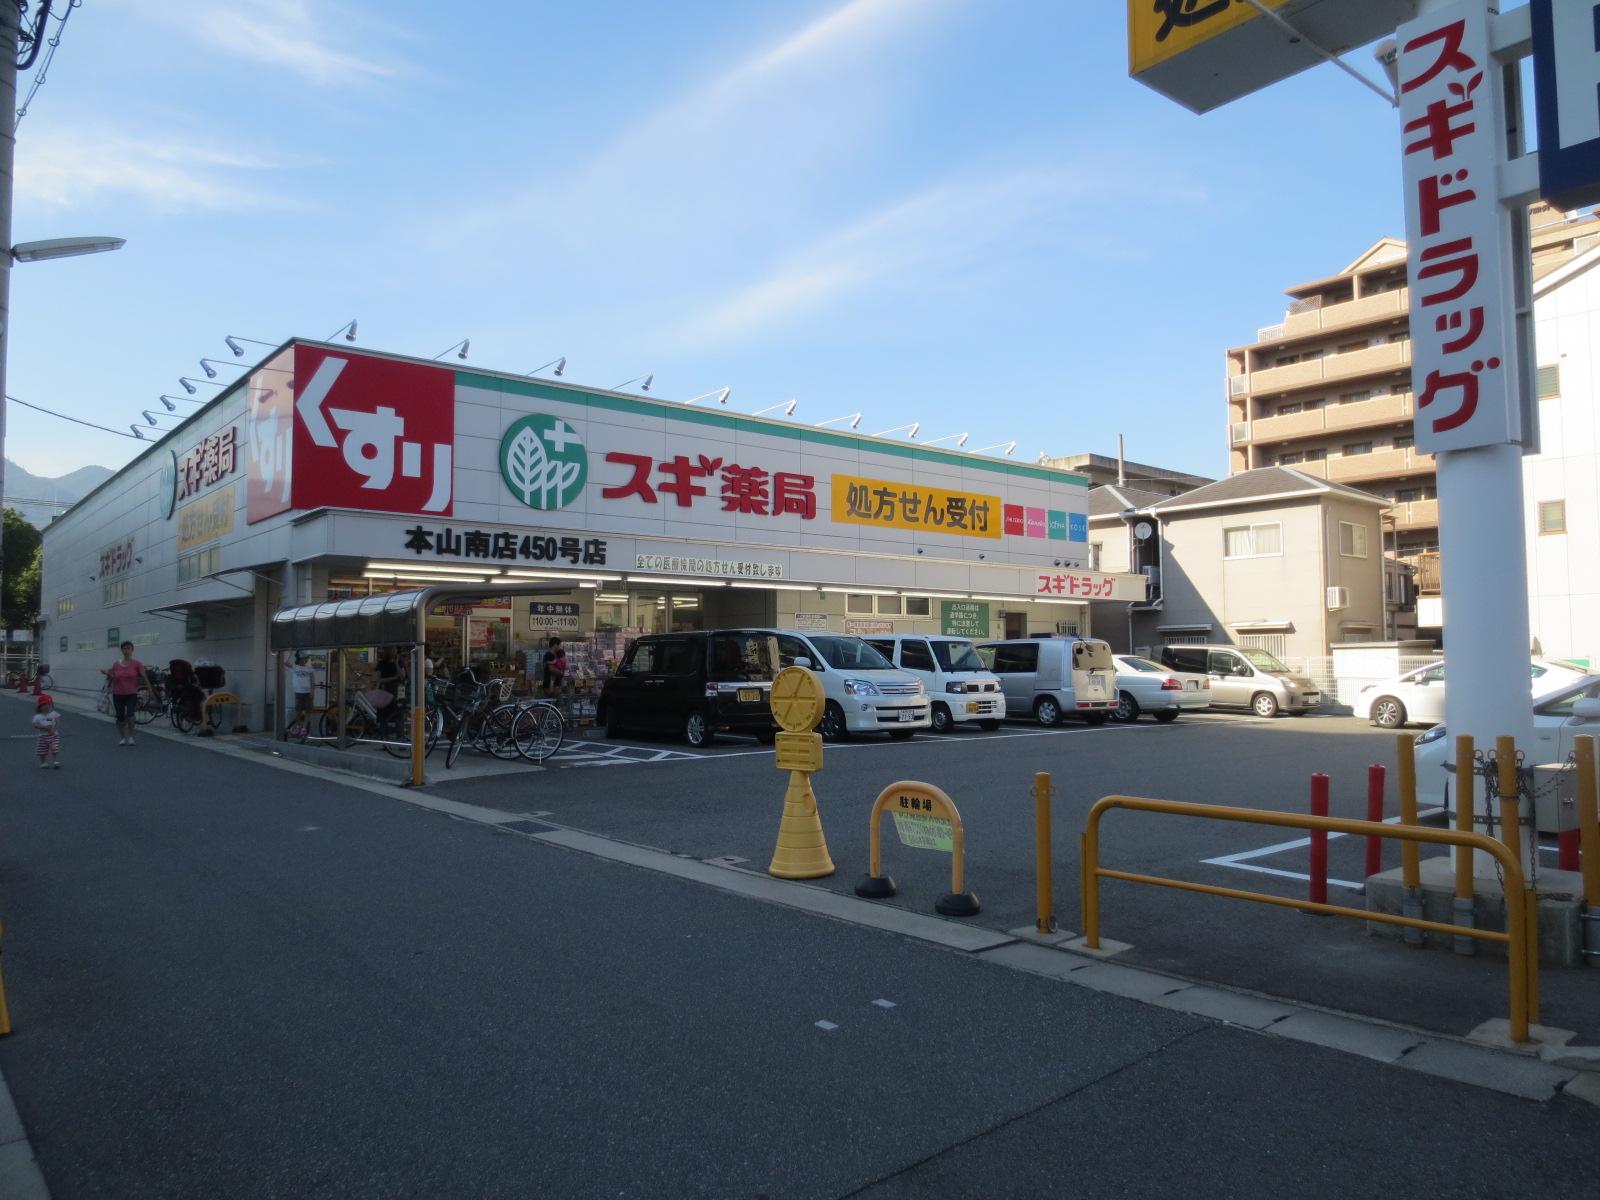 Dorakkusutoa. Cedar pharmacy Motoyamaminami shop 754m until (drugstore)